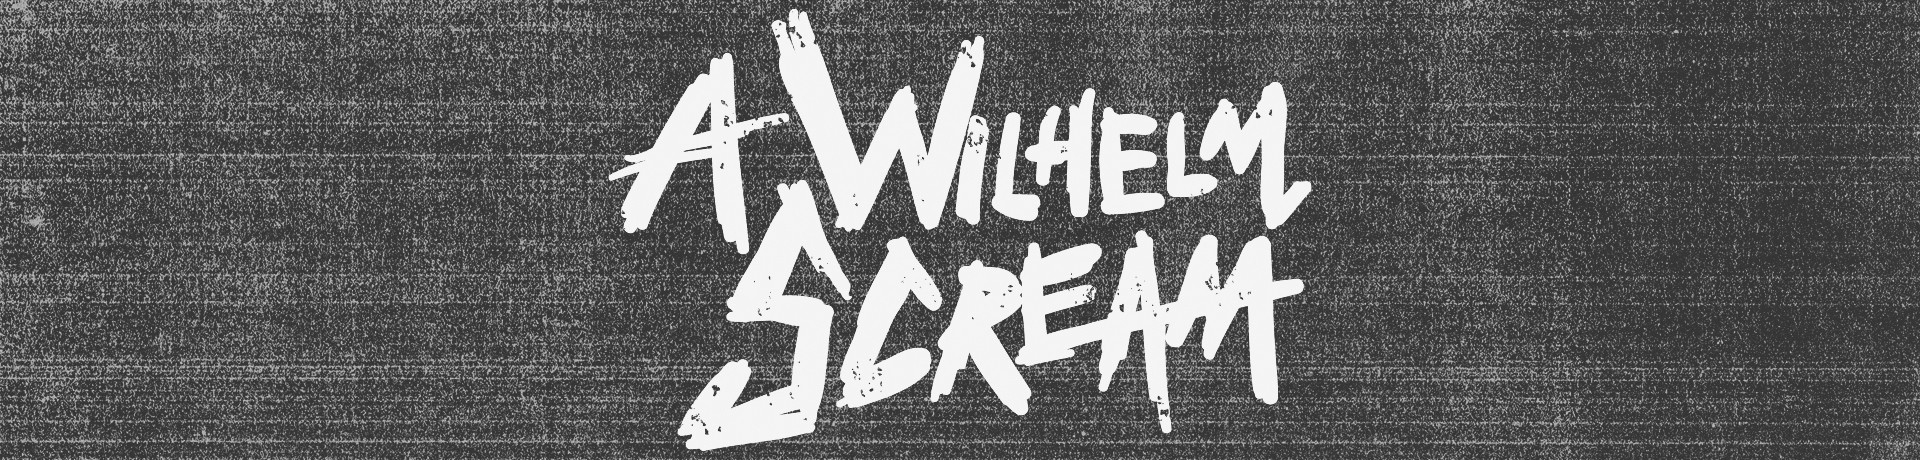 A Wilhelm Scream - Grim [Soft Hoodie]